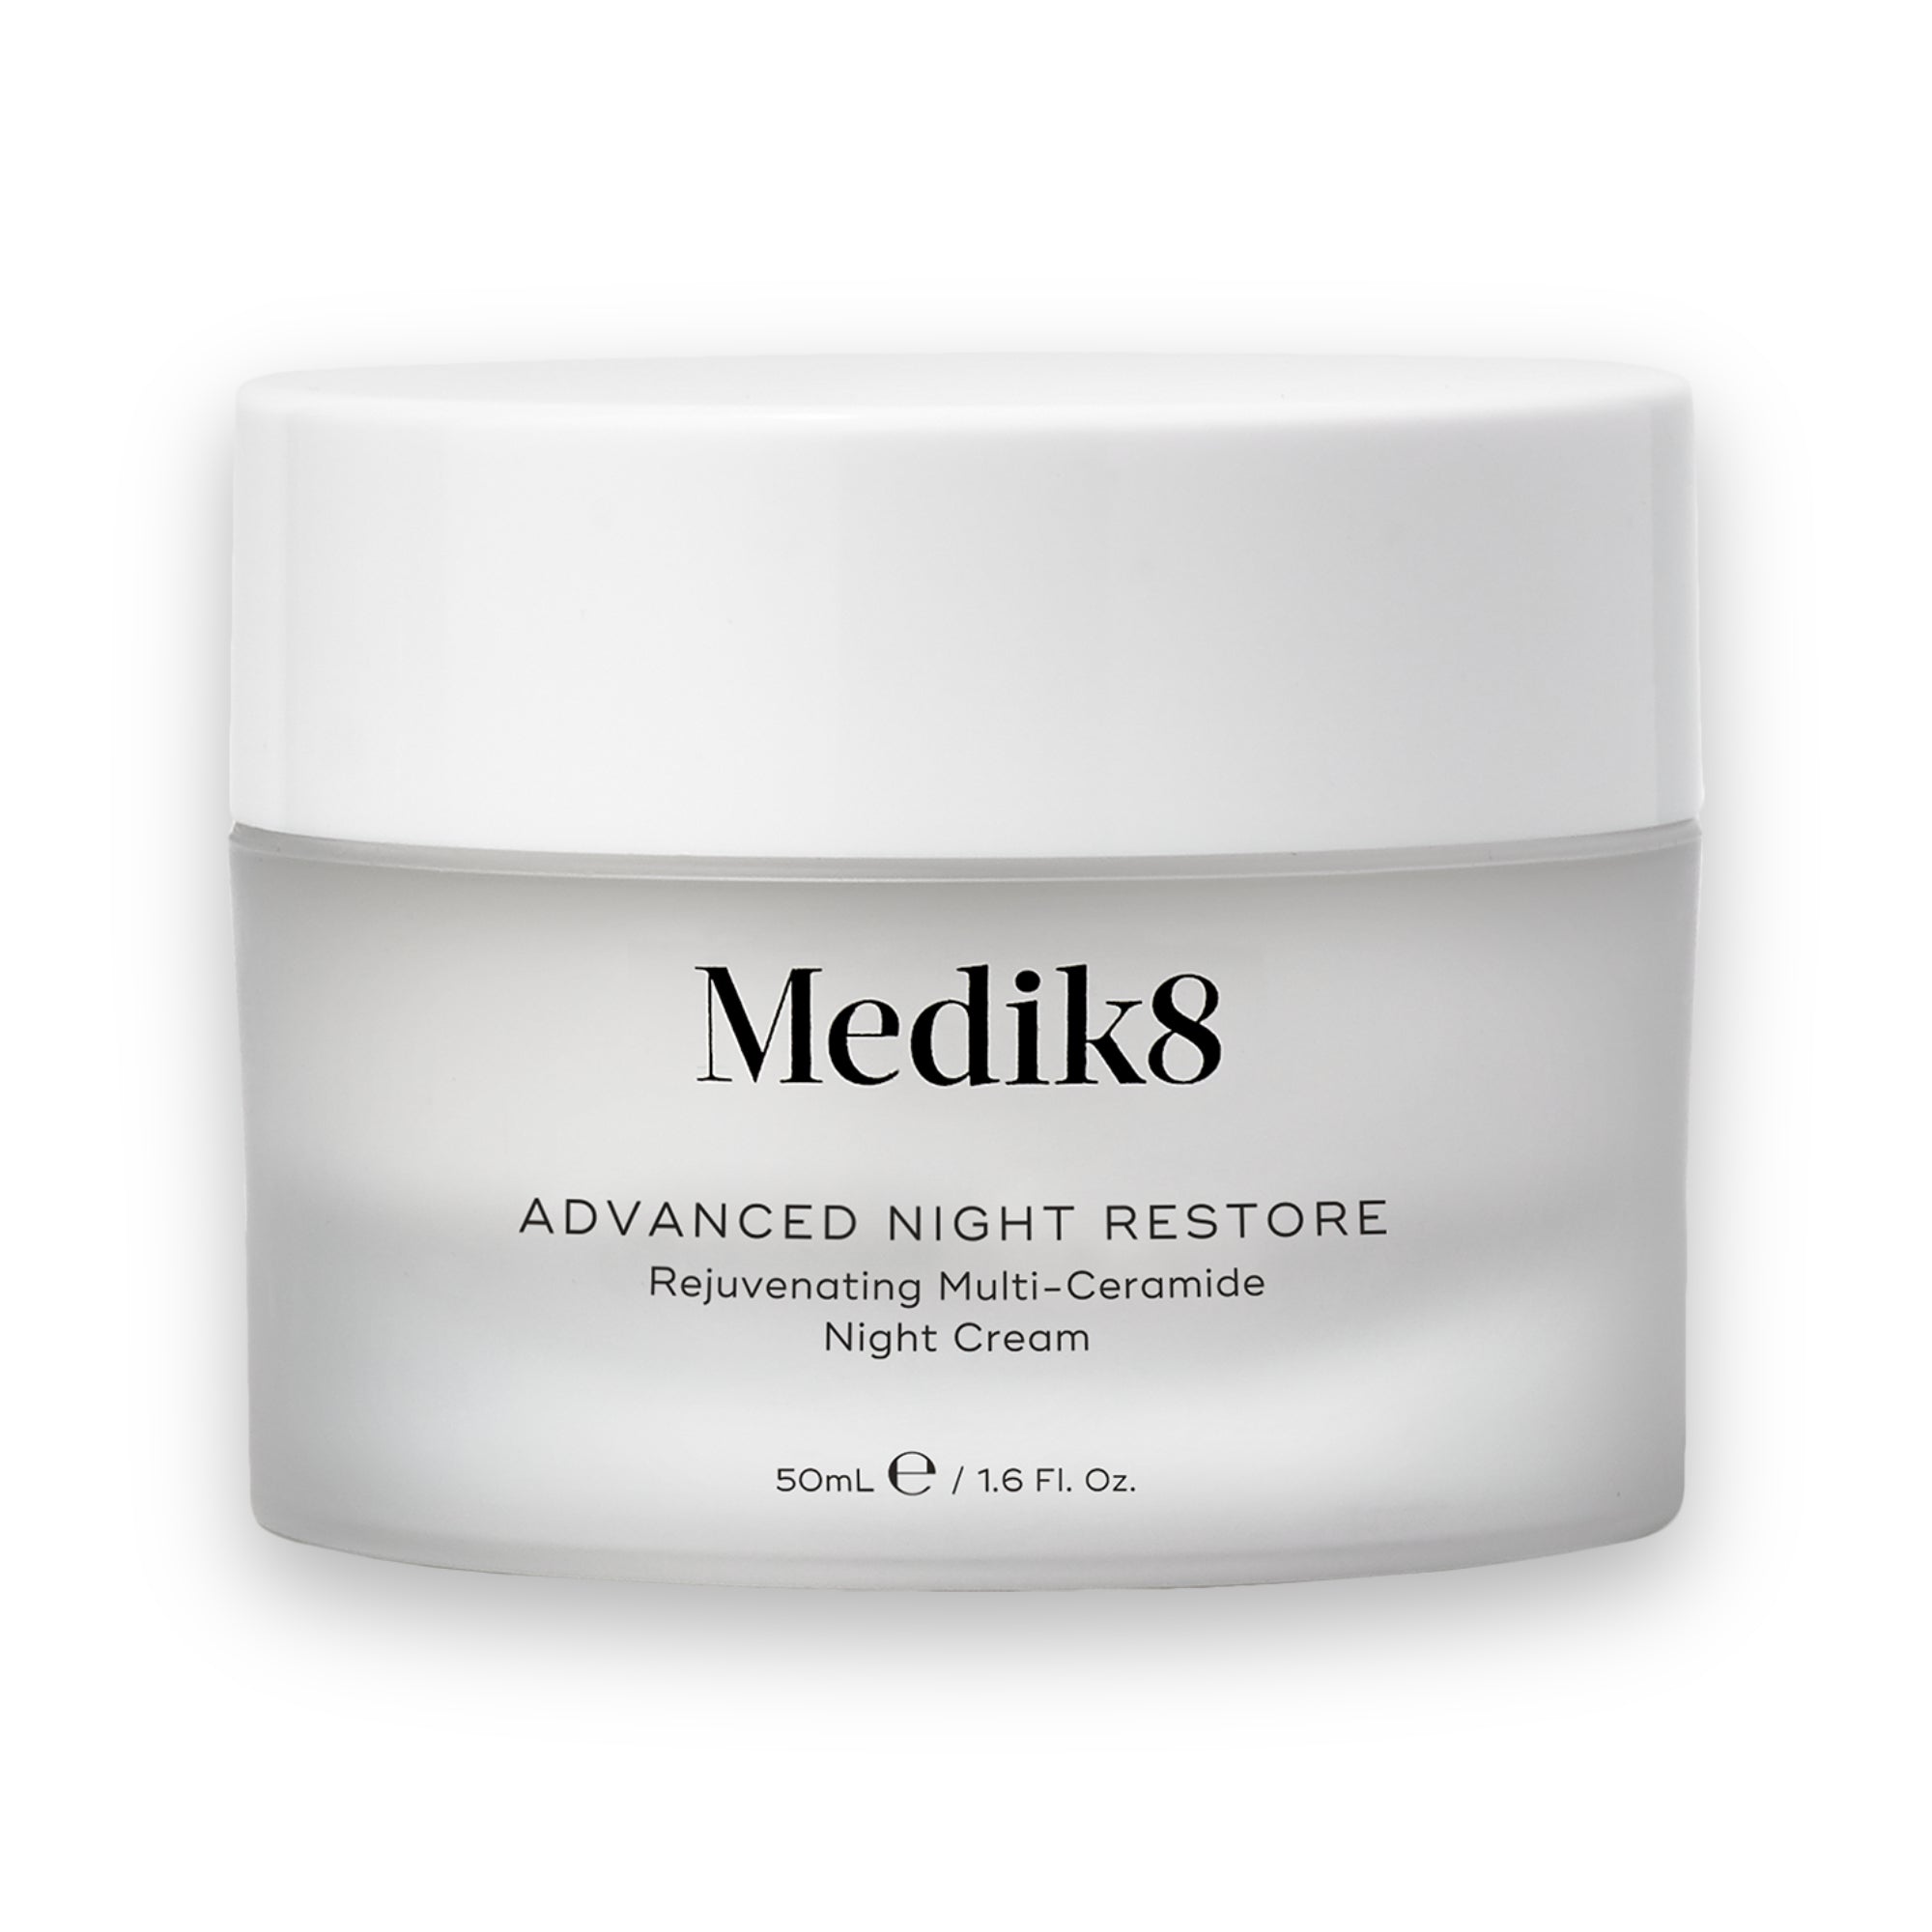 Medik8 Advanced Night Restore